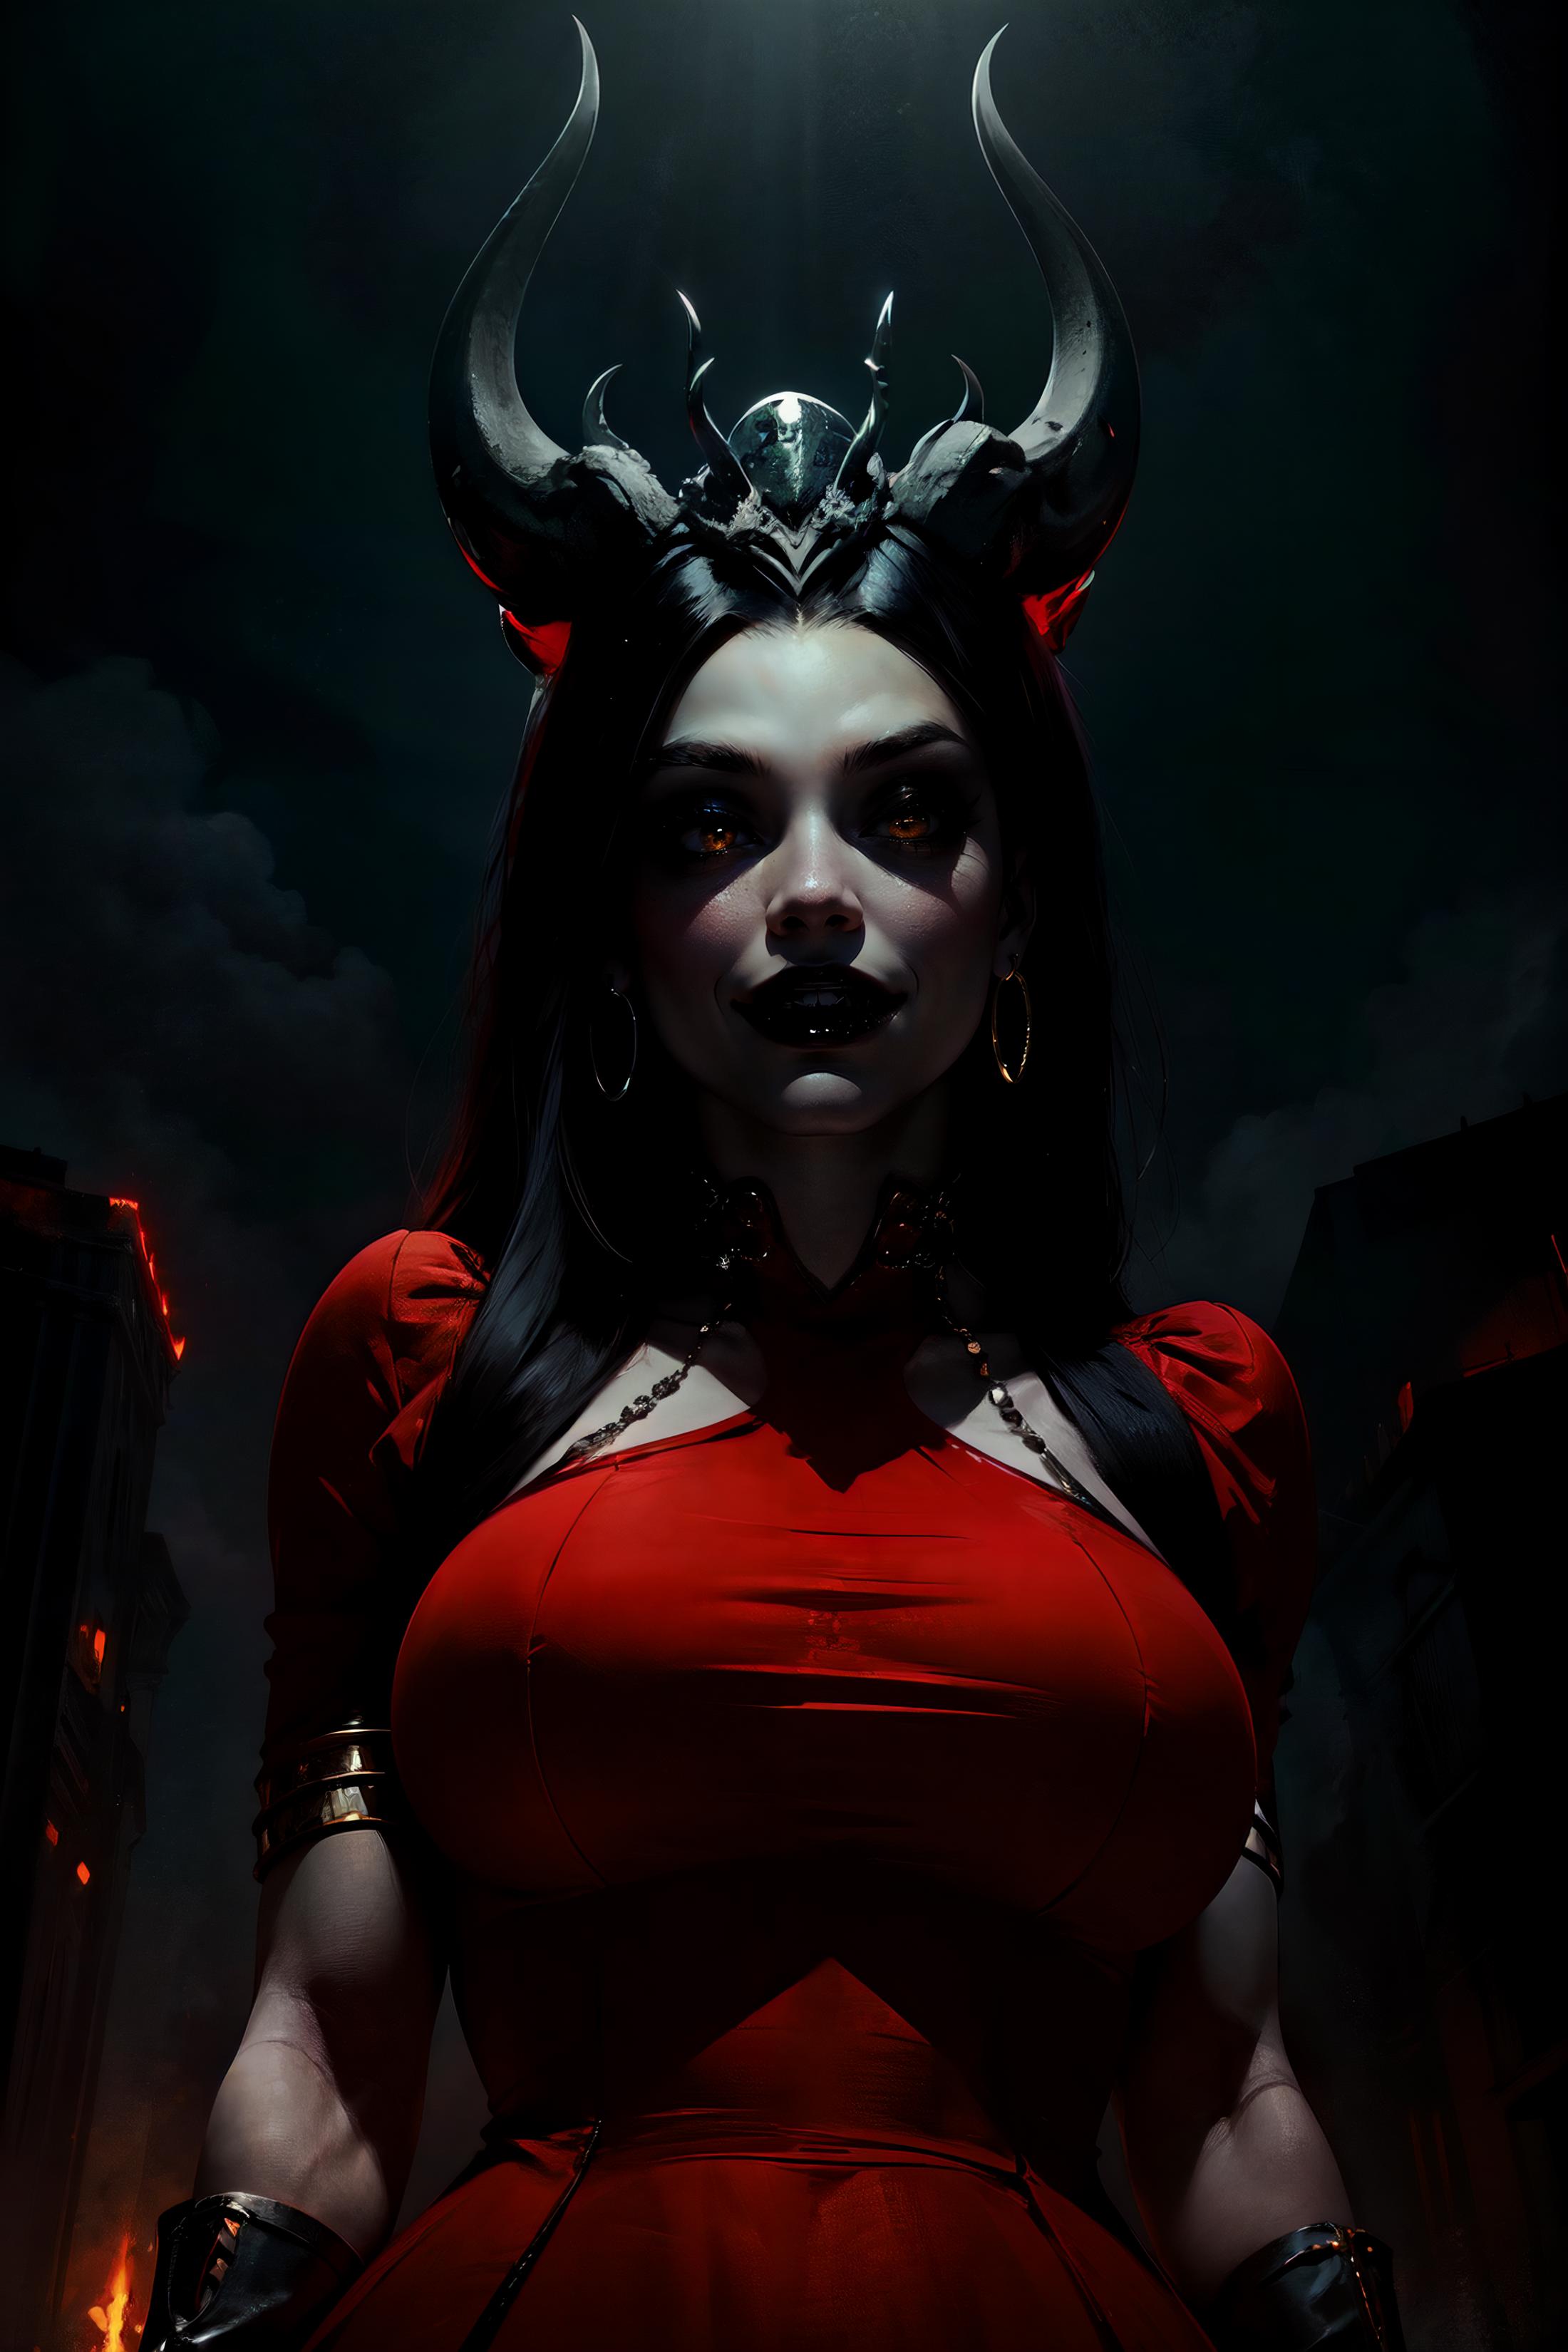 Demon Girls image by Iris_DS